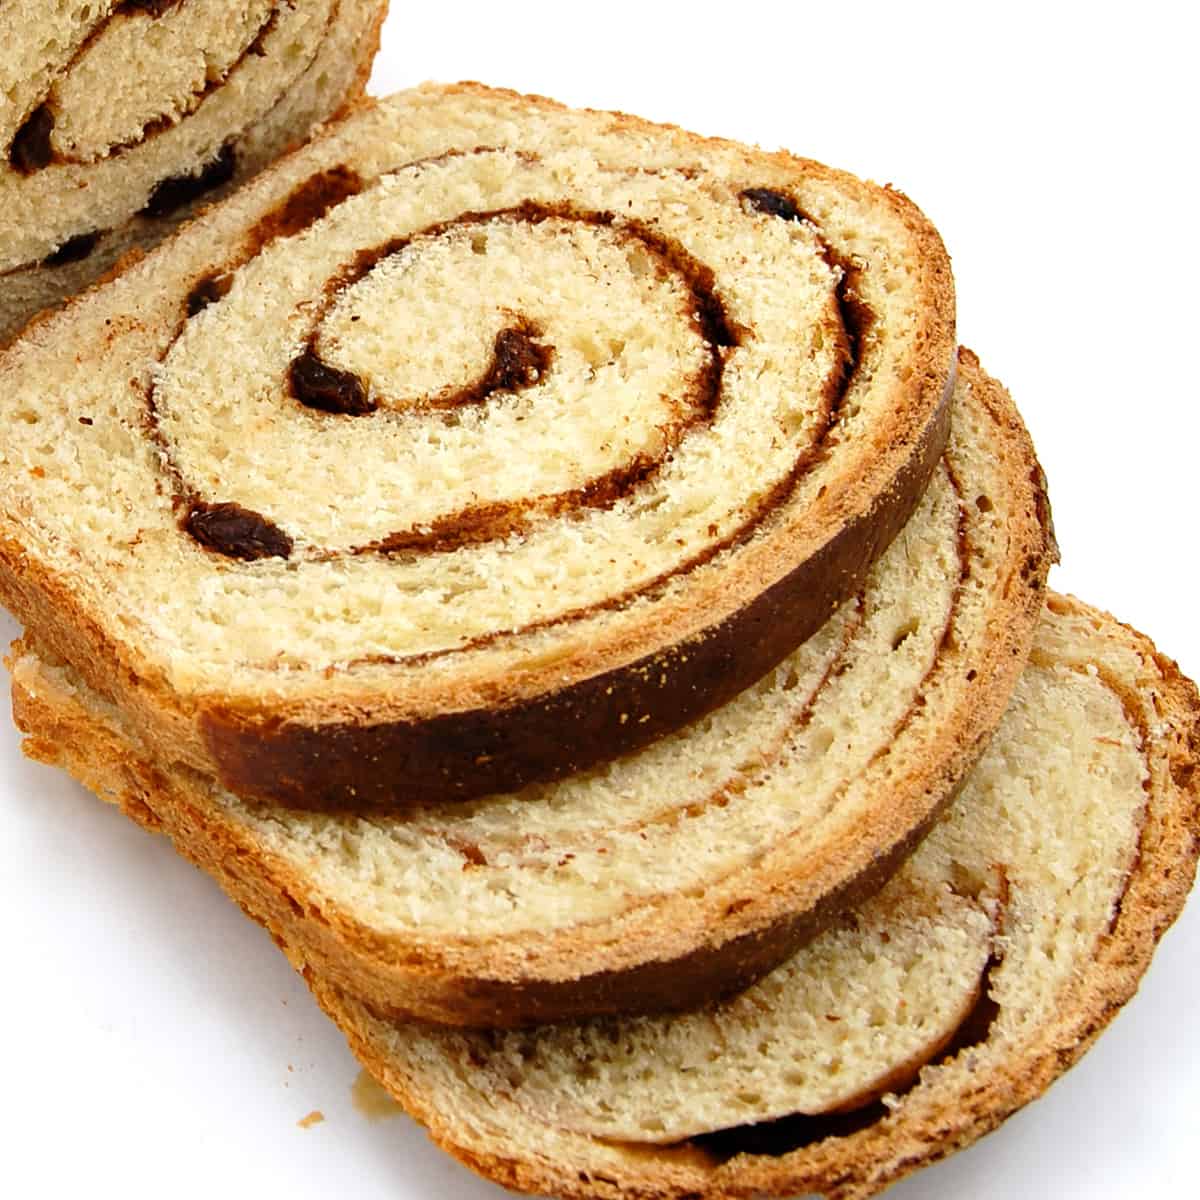 Raisin Cinnamon Swirl Bread